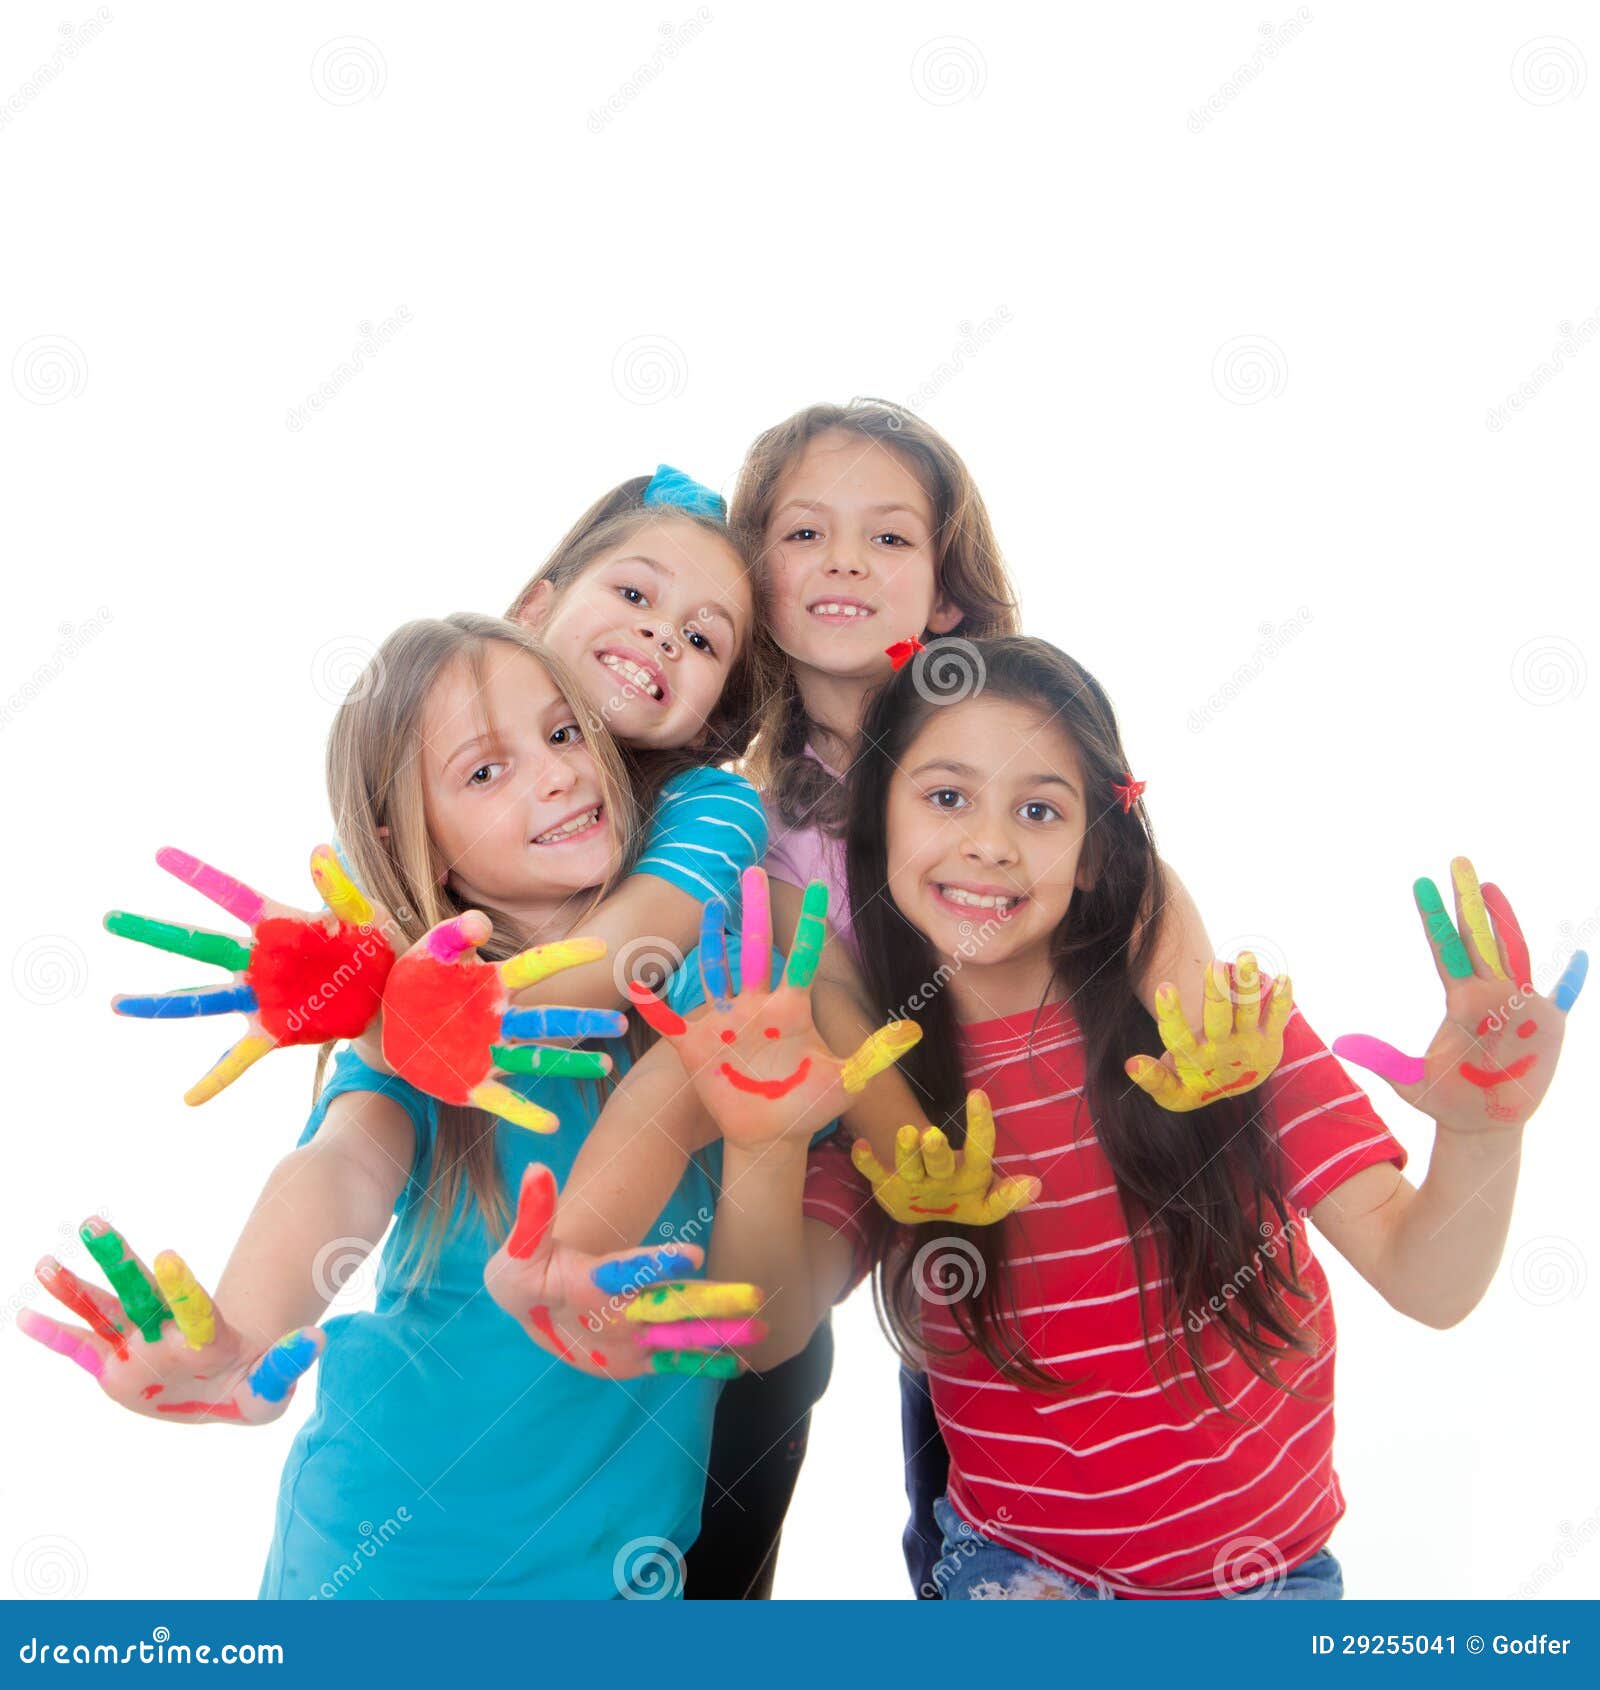 children-paint-fun-29255041.jpg